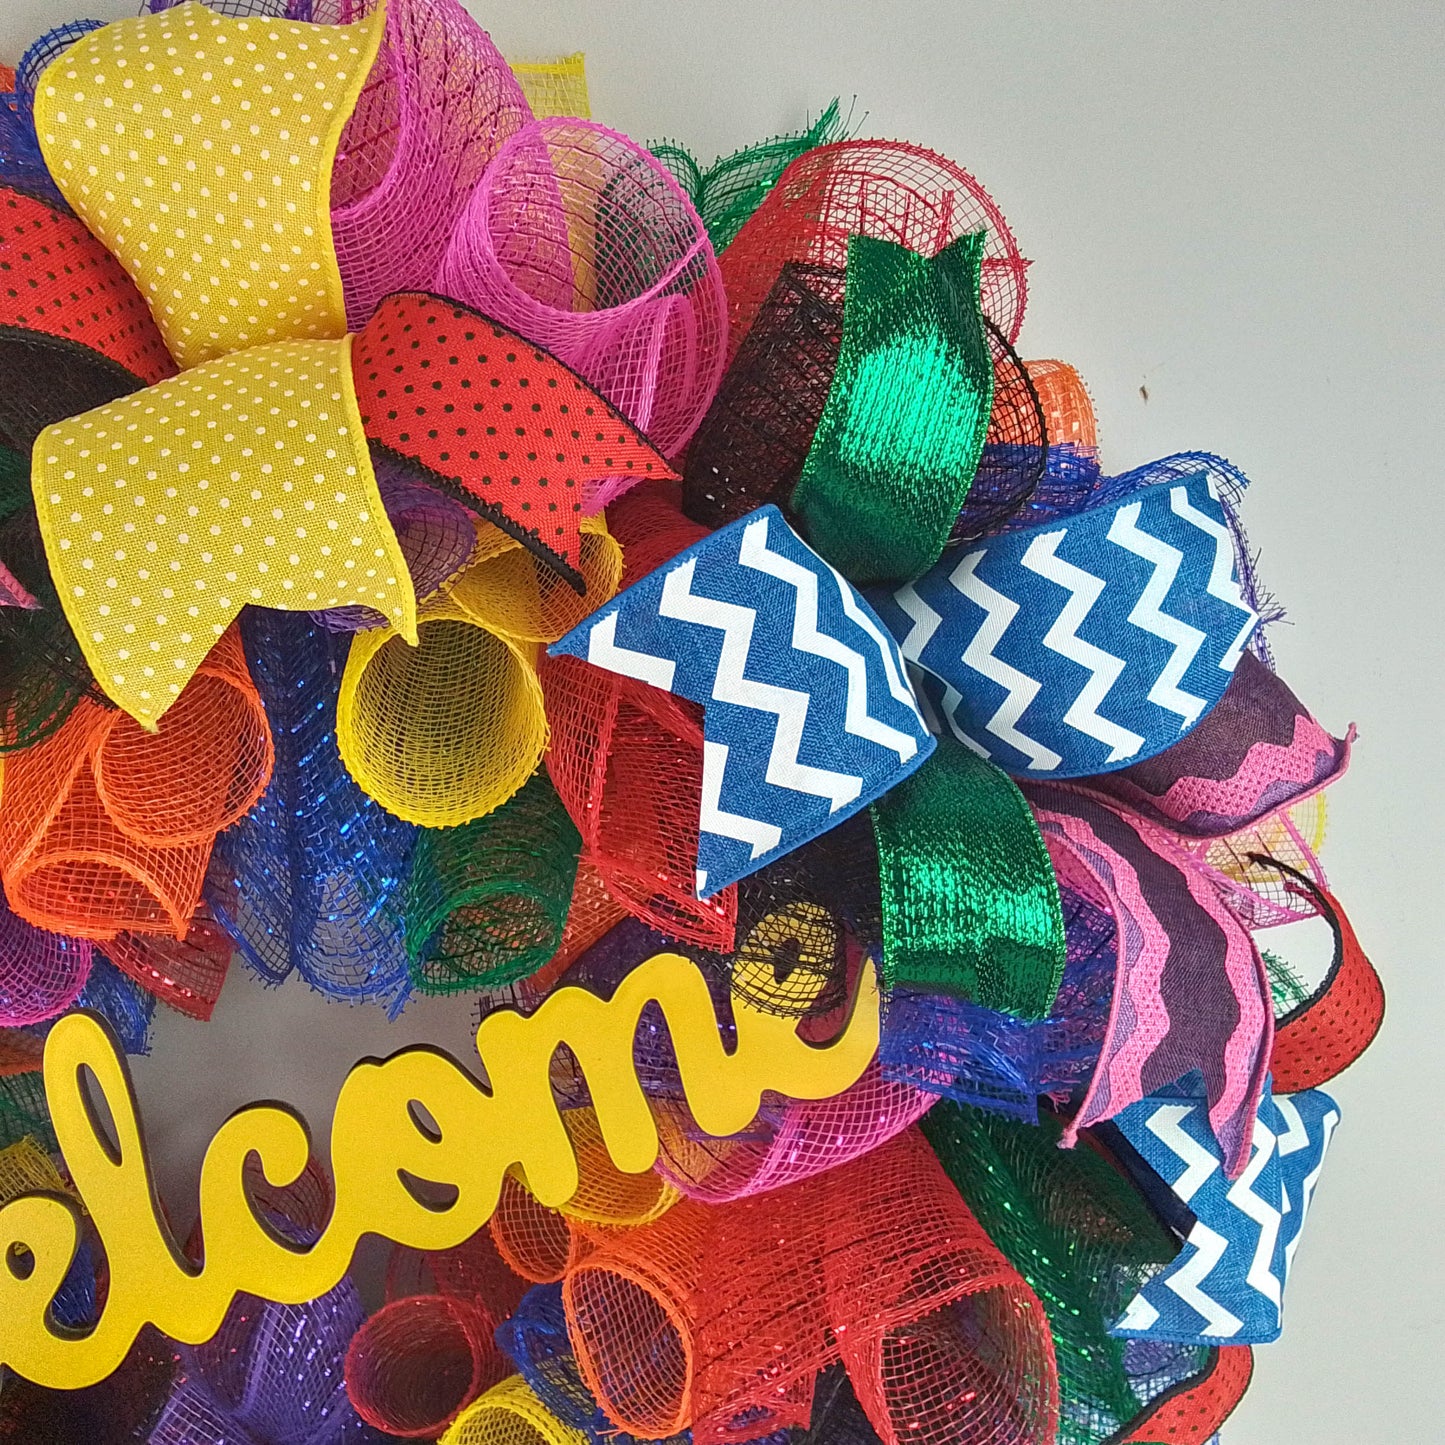 Colorful Welcome Wreath, Vibrant Door Hanger, Crafty Event Décor